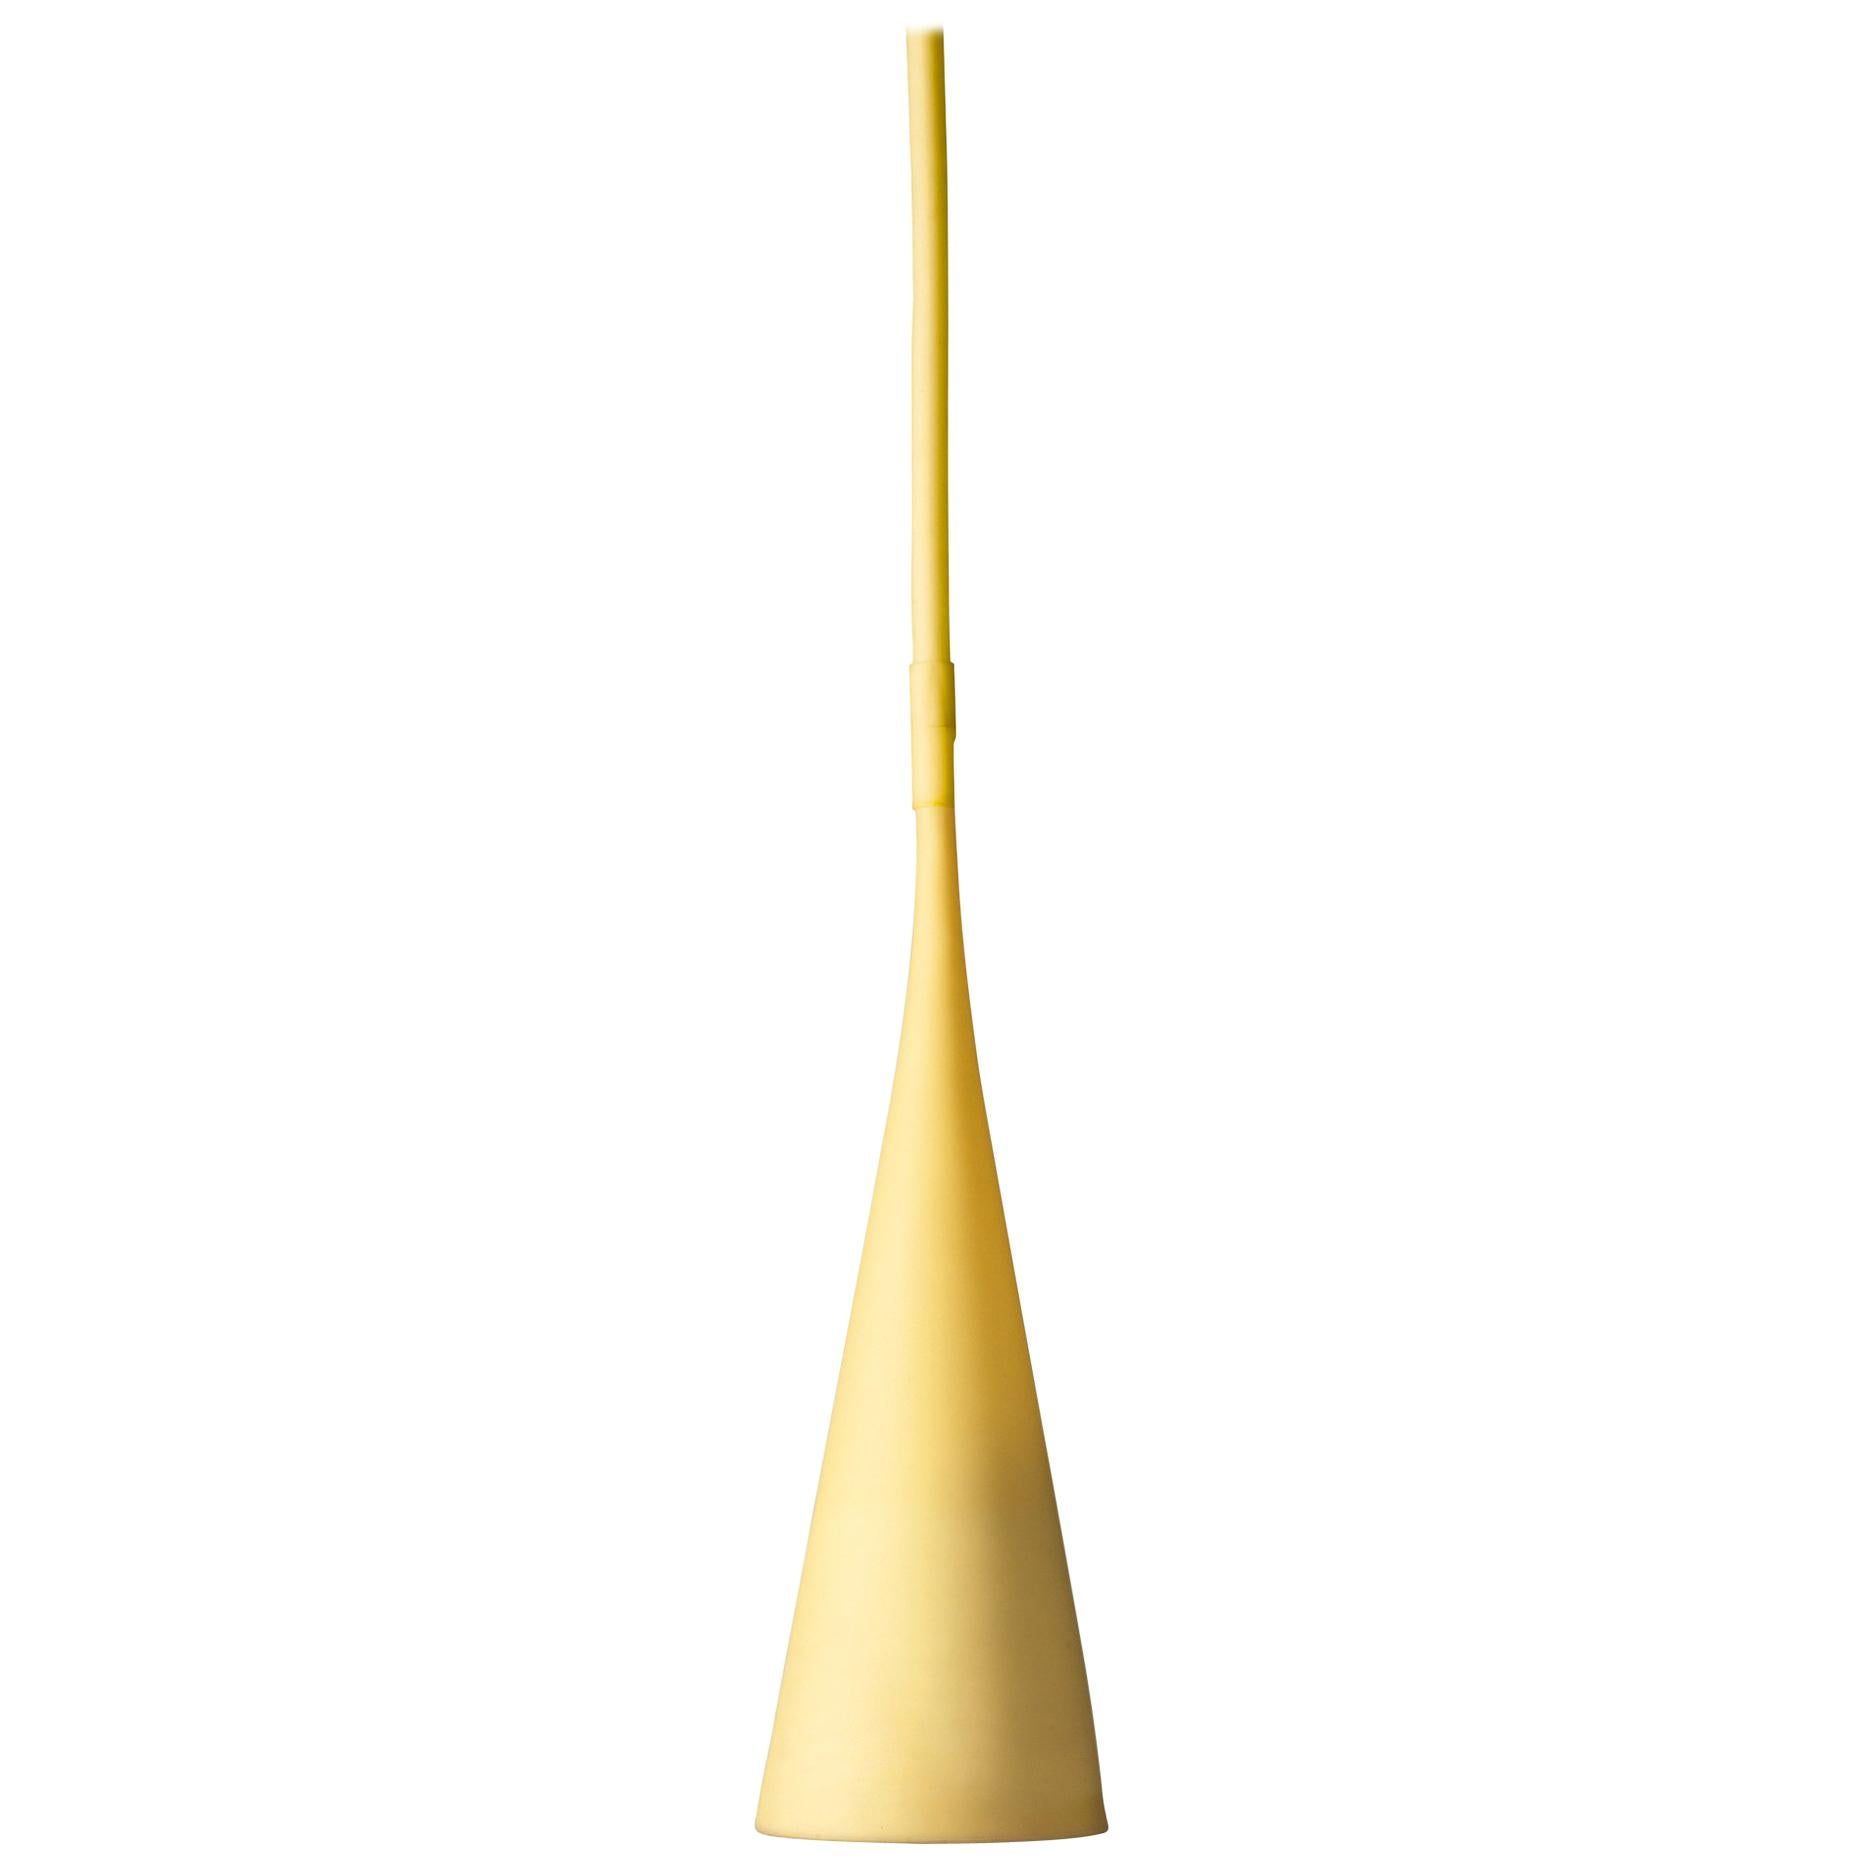 Foscarini UTO Hänge-/Table-Lampe in Gelb von Lagranja Design